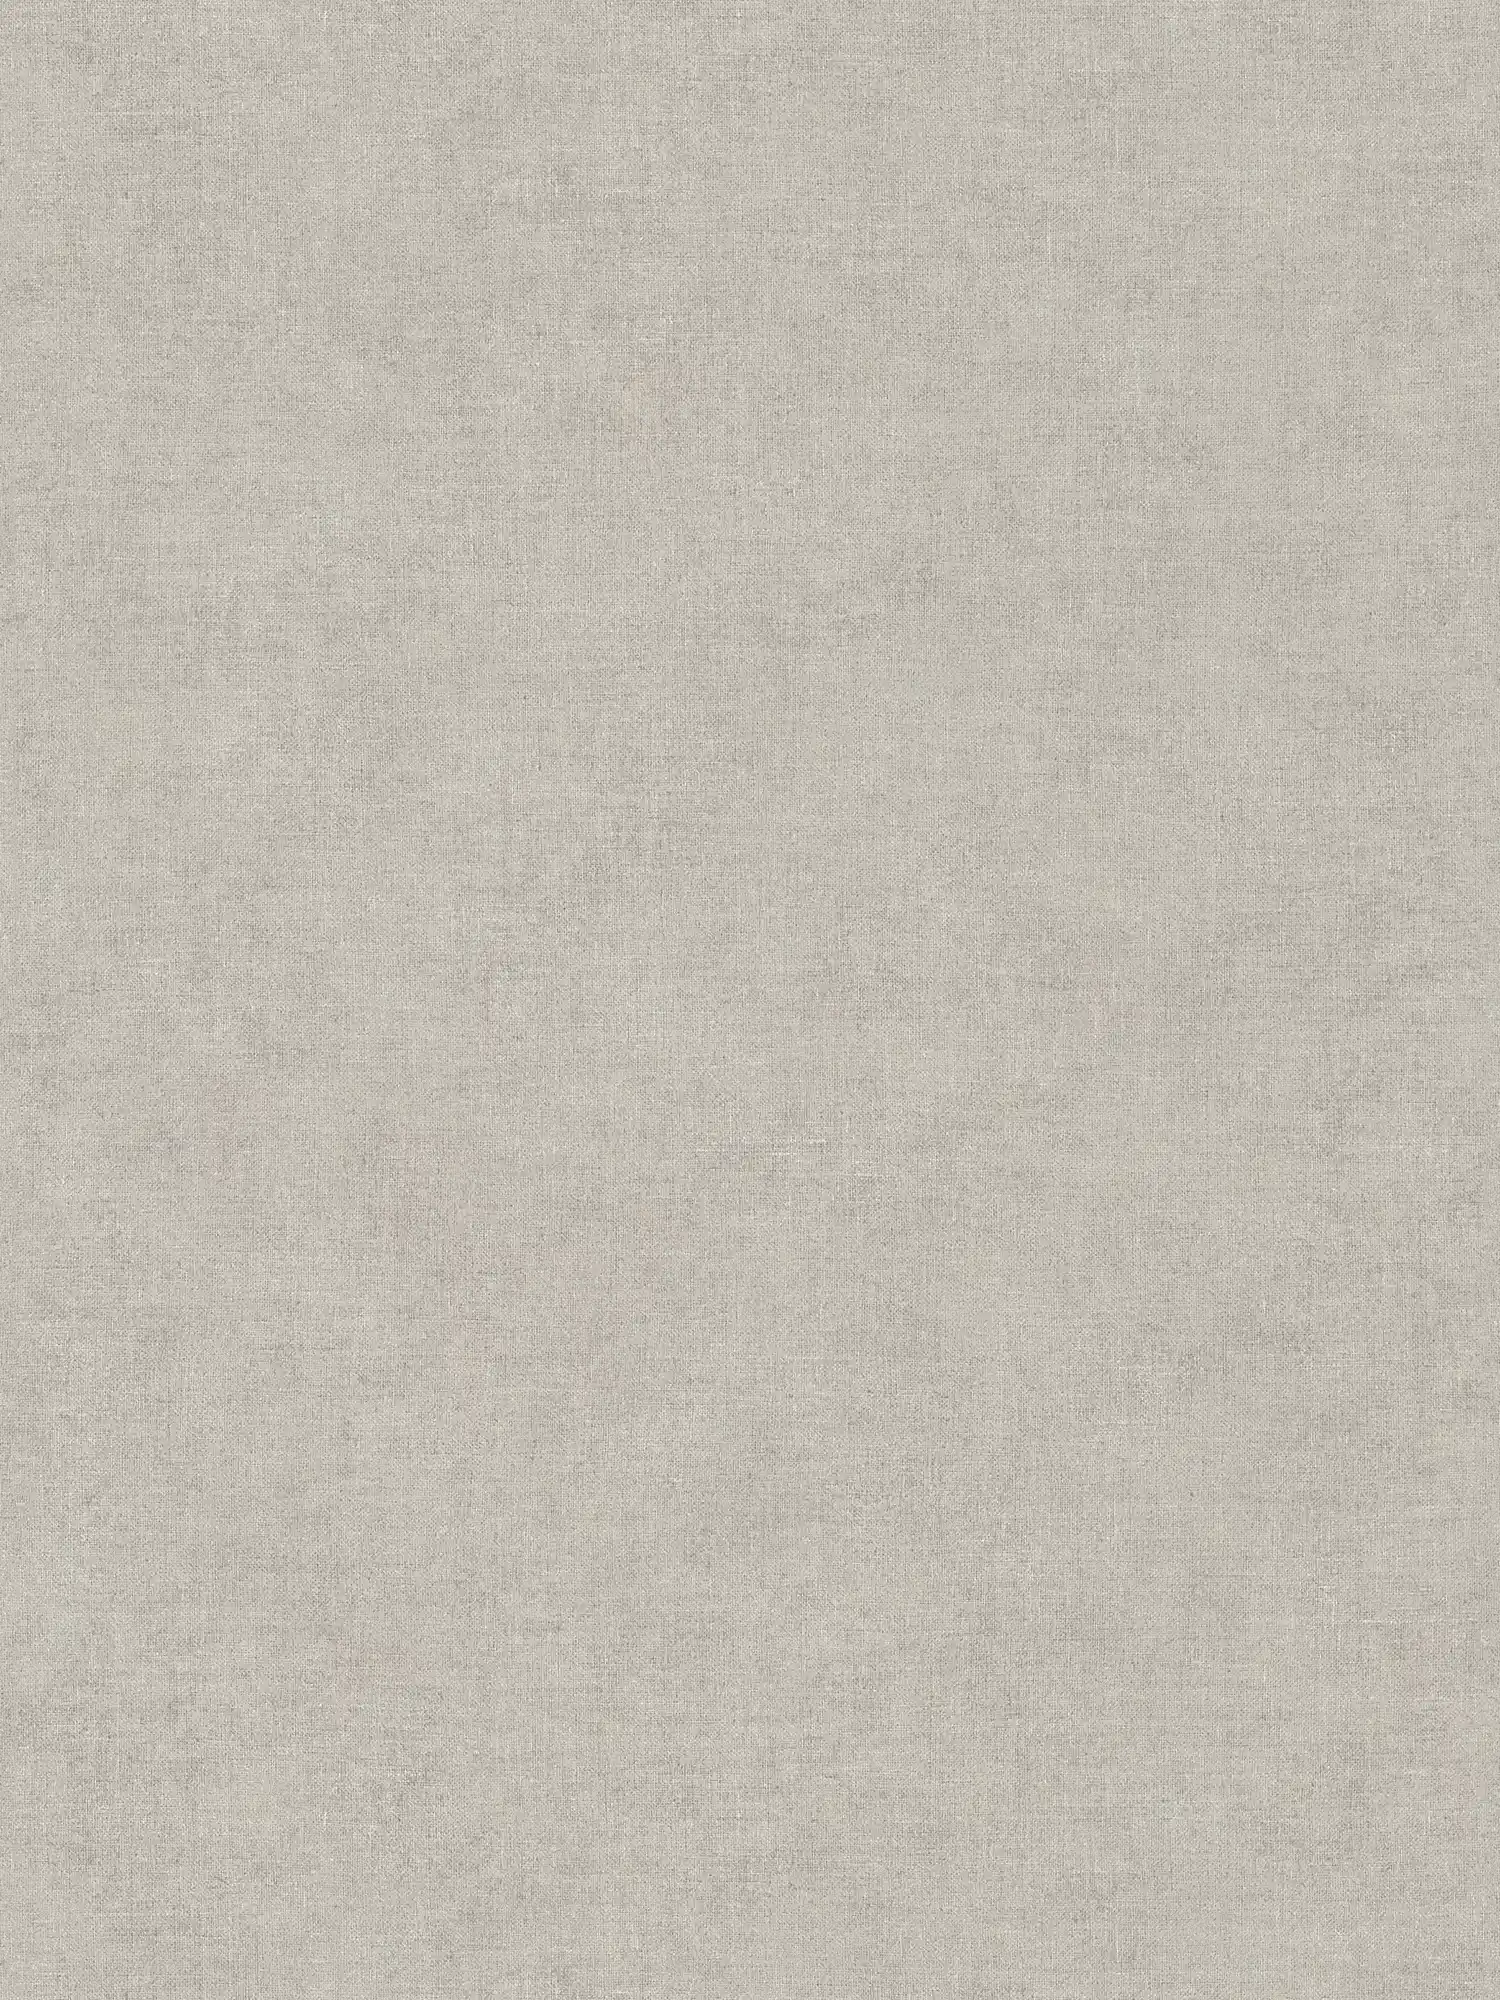 wallpaper grey plain & matte with texture pattern
